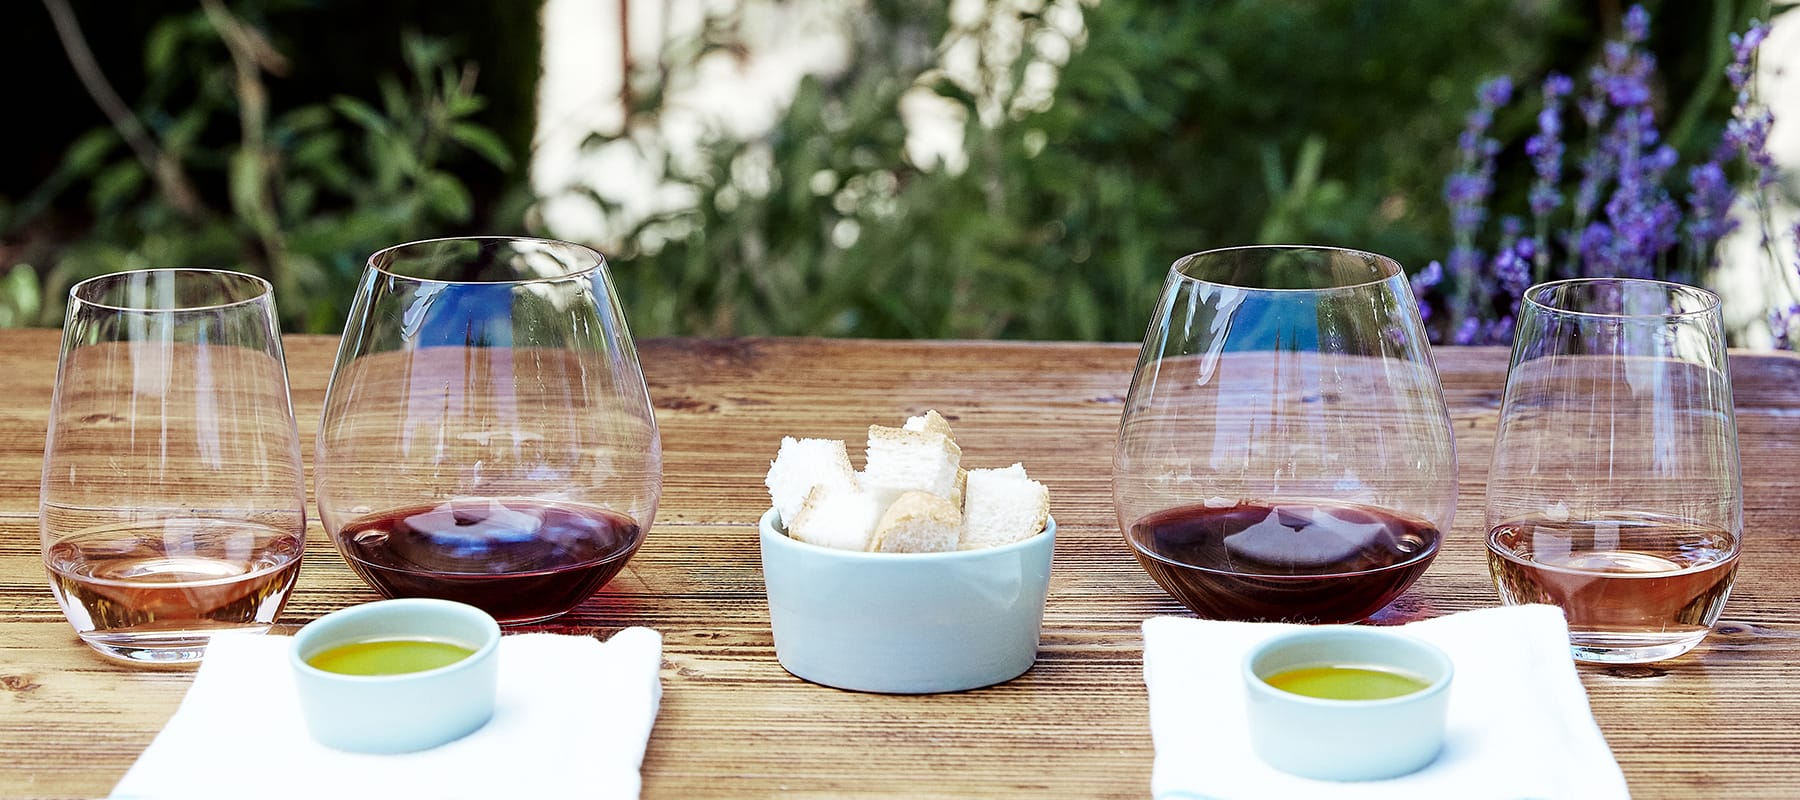 Merriam Wine - Outdoor Tasting